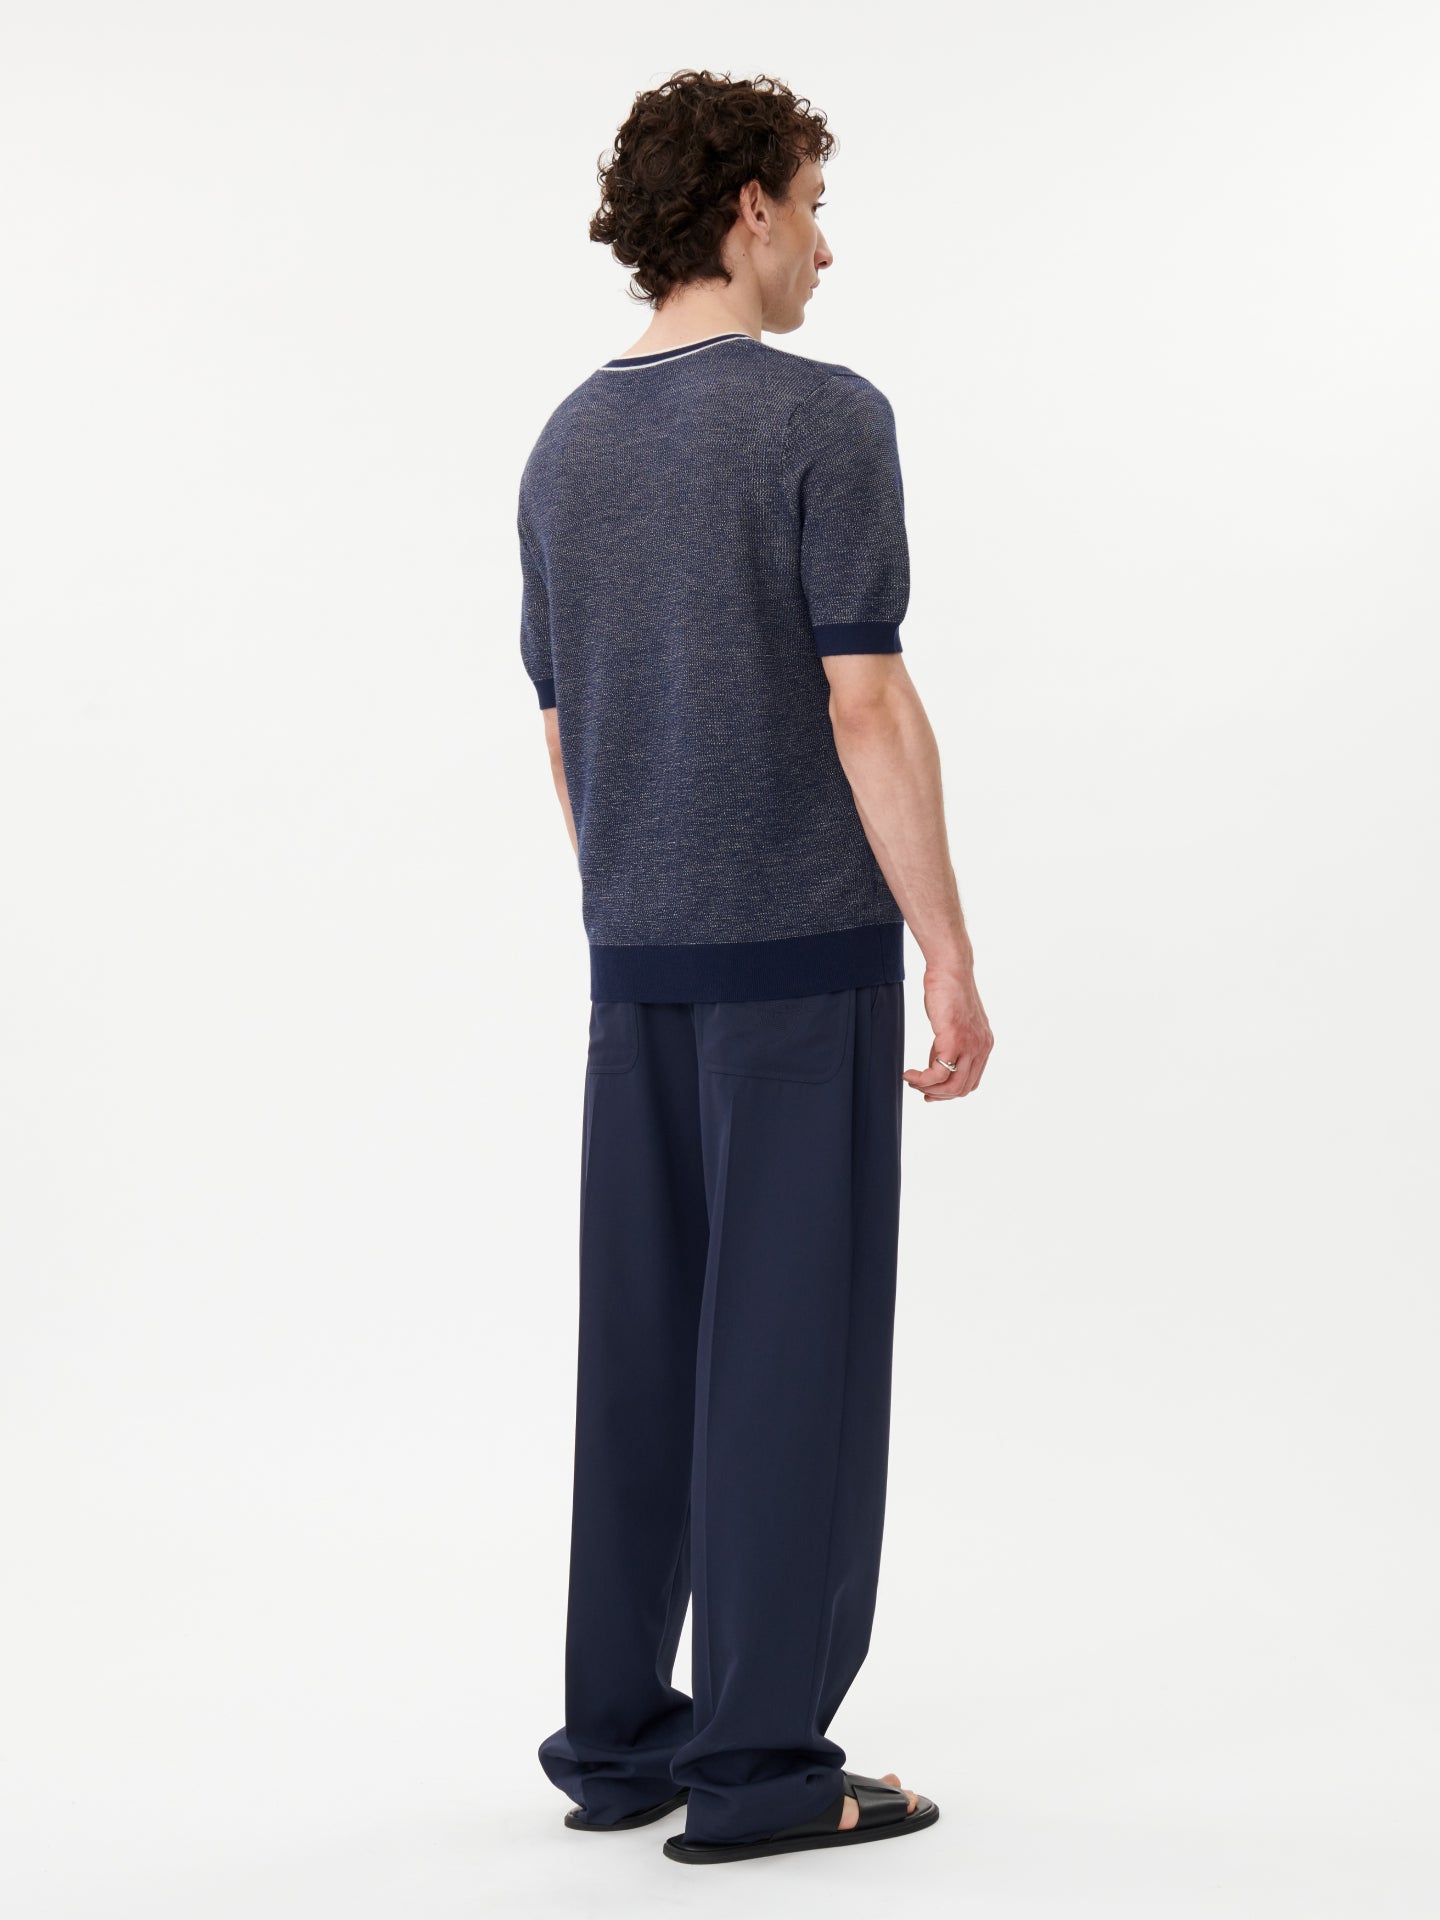 Men's Silk Cashmere Jacquard Knit T-shirt Navy - Gobi Cashmere